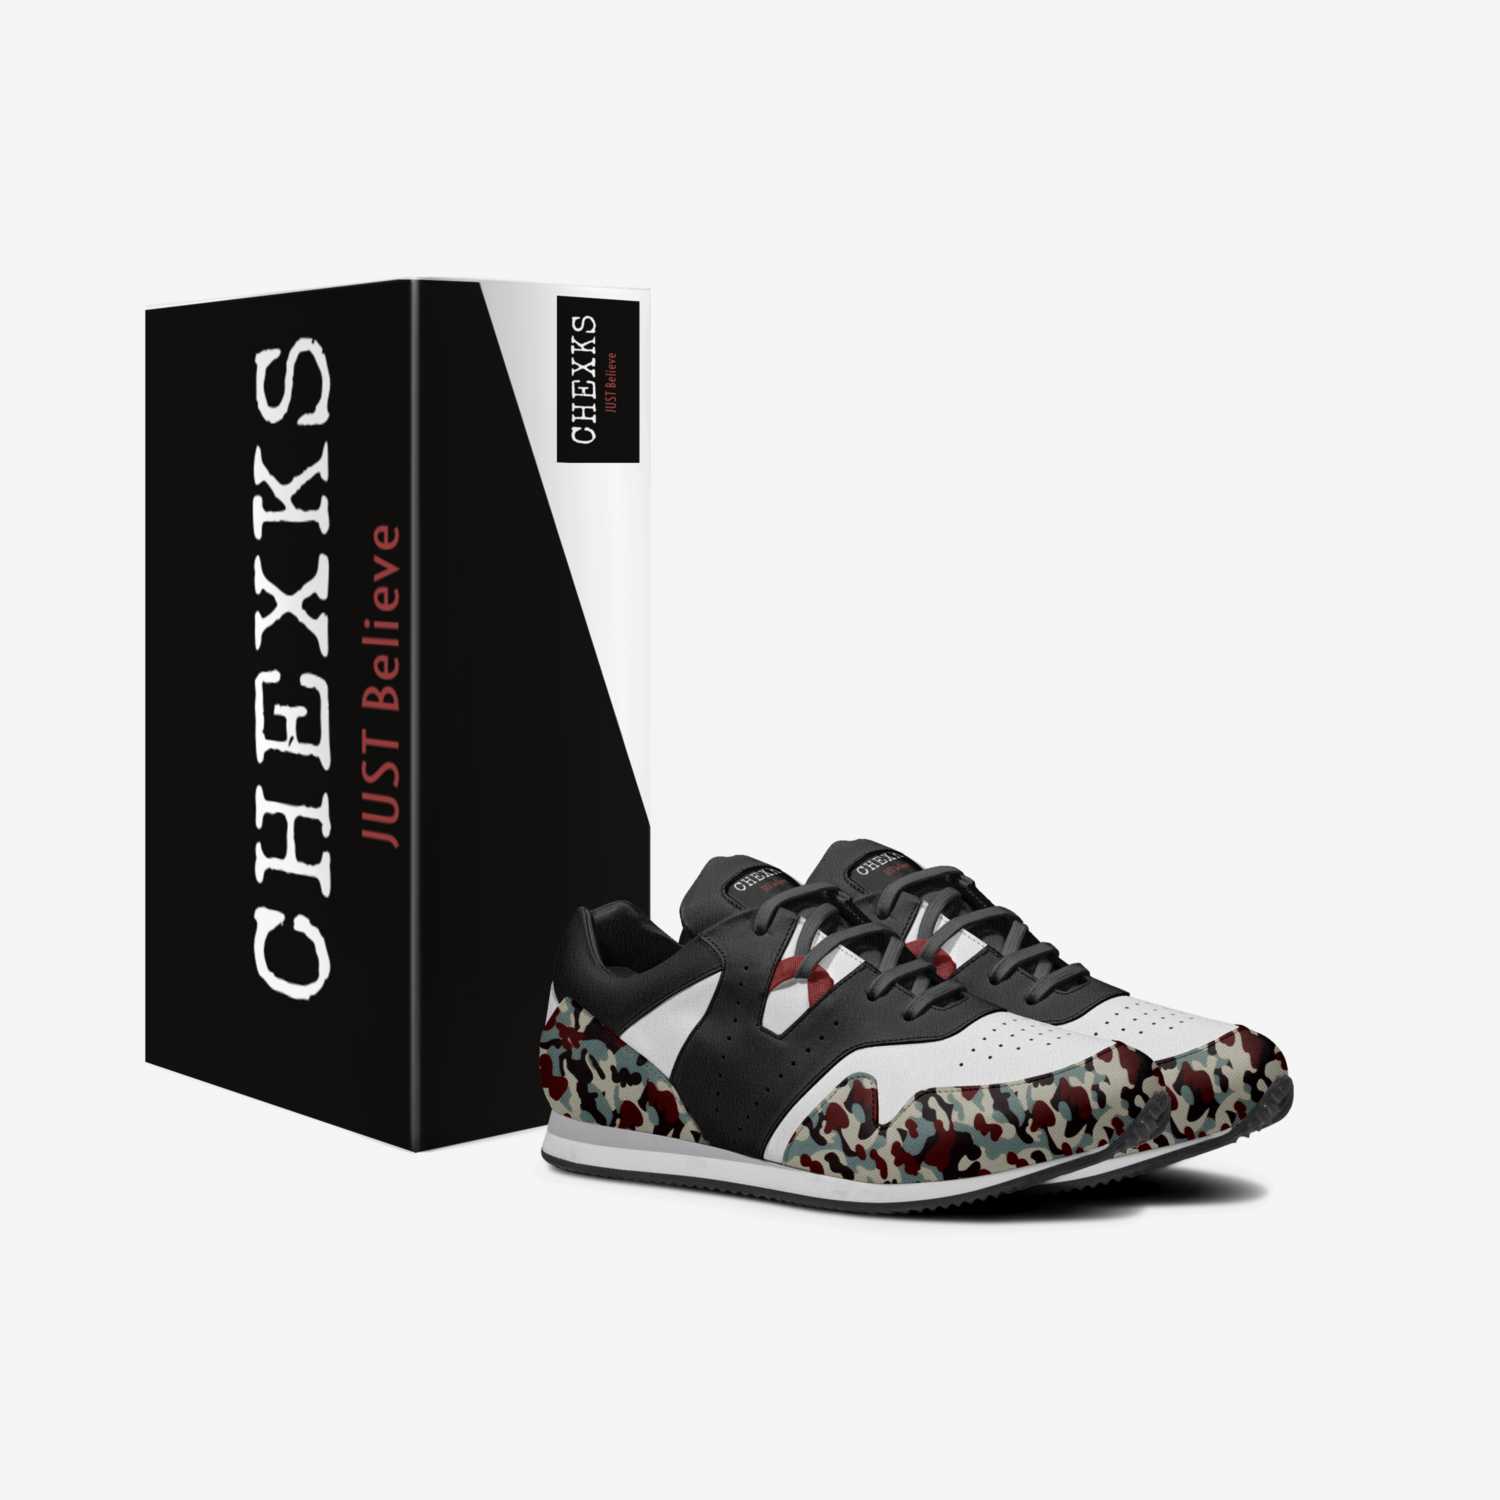 Chexks custom made in Italy shoes by Yarhonda Freeman | Box view